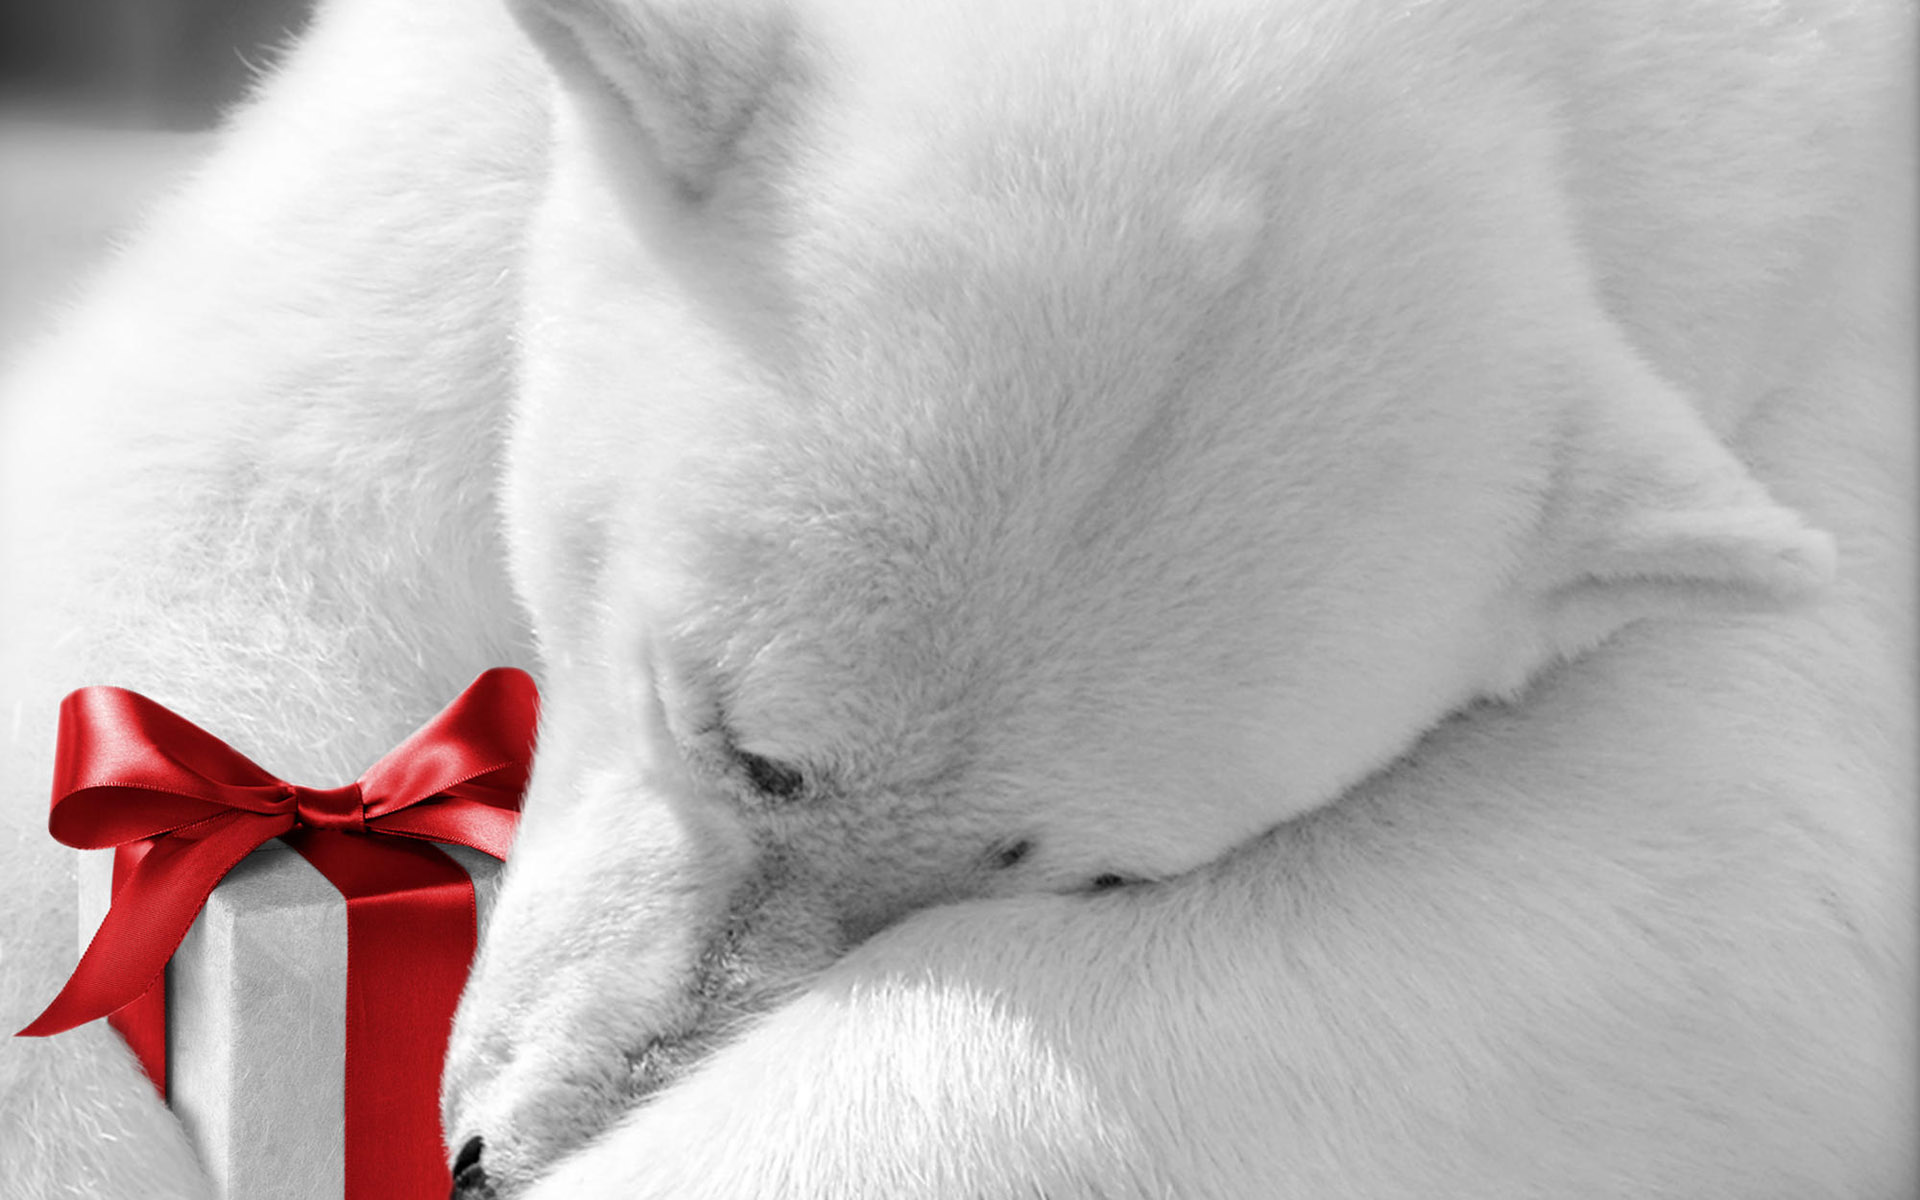 Previous, Christmas wallpapers - Polar bear with a gift wallpaper